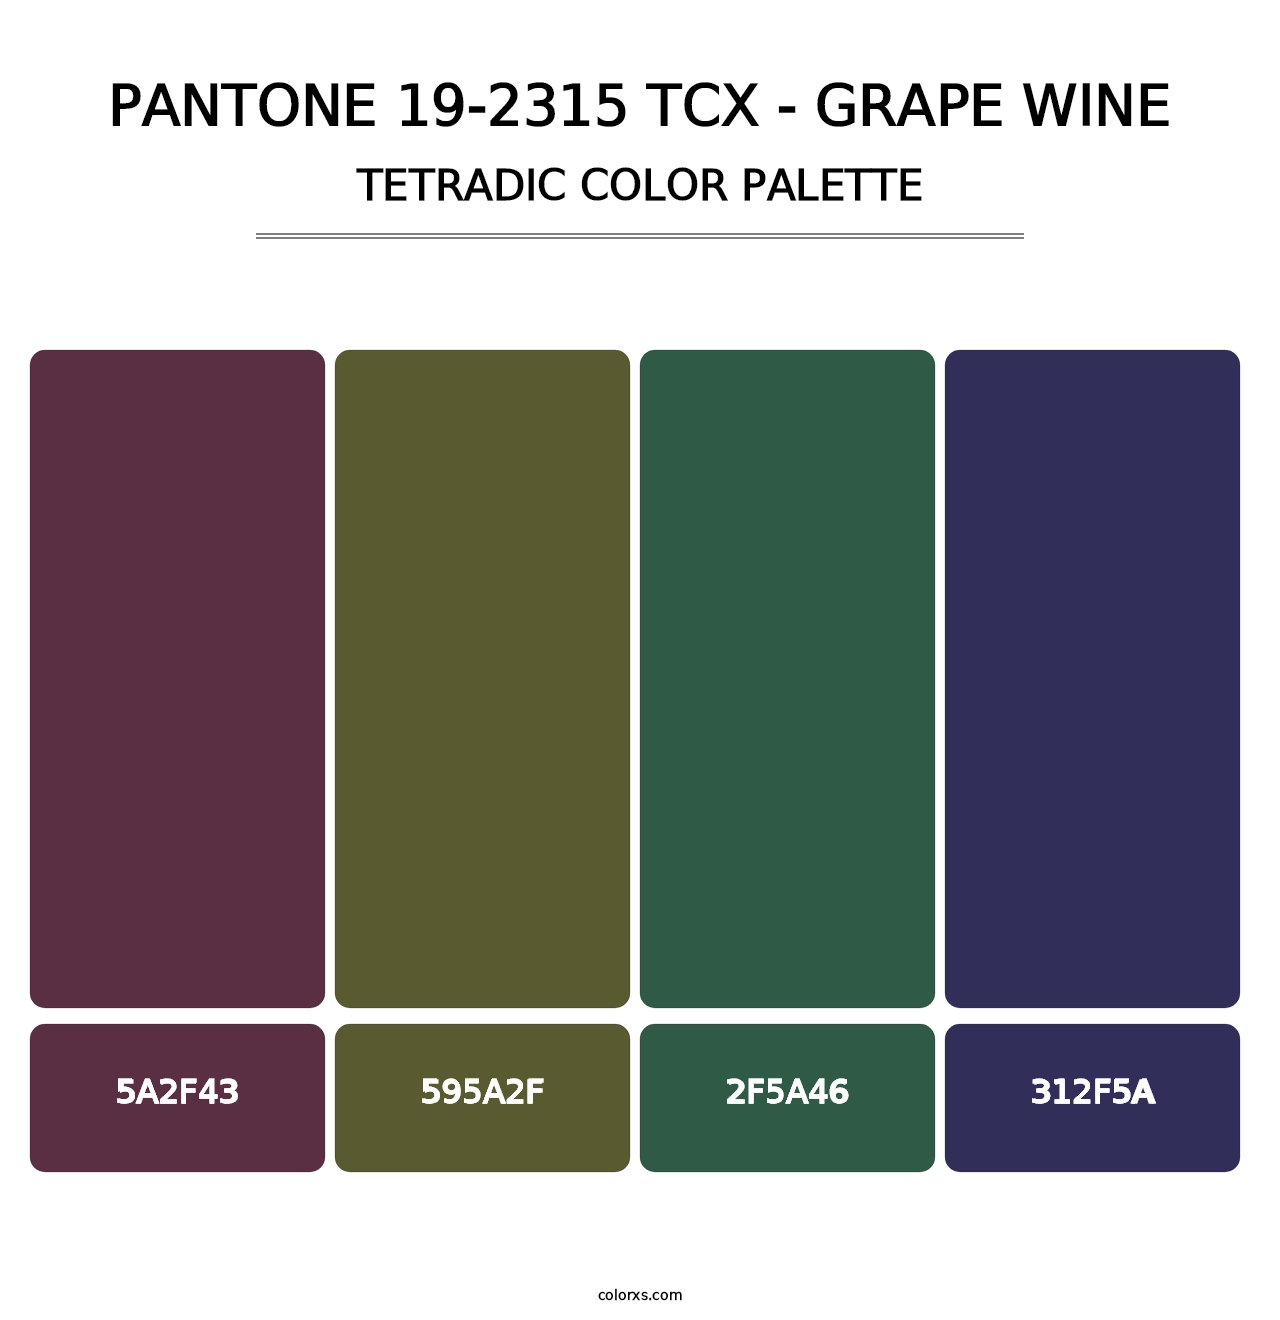 PANTONE 19-2315 TCX - Grape Wine - Tetradic Color Palette